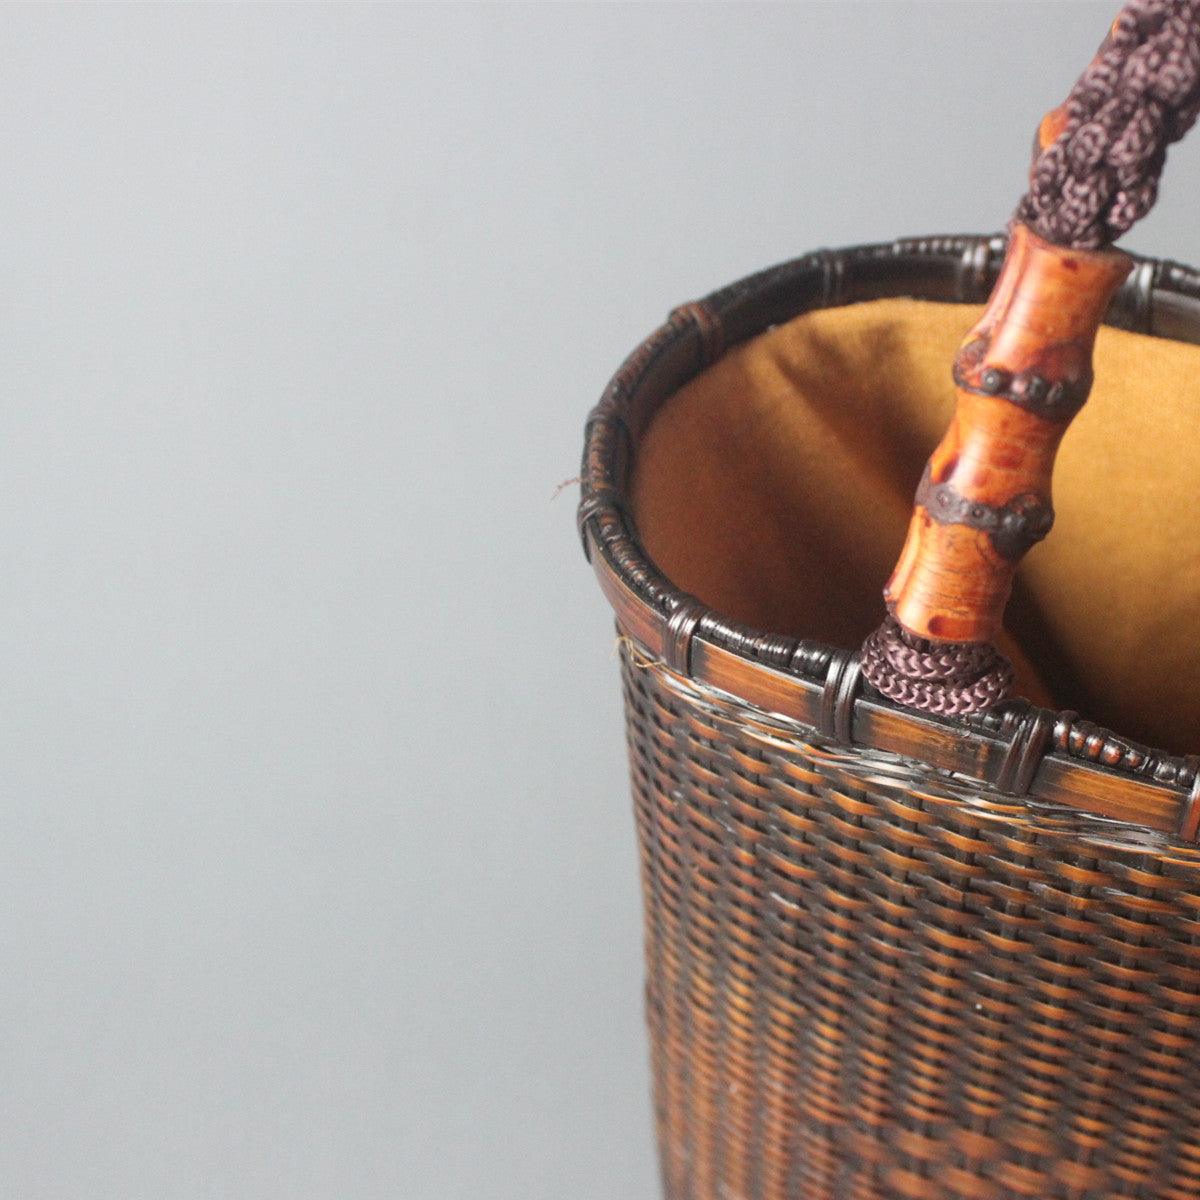 Handmade Vintage Bamboo Braided Women's Handbag - Bamboo.